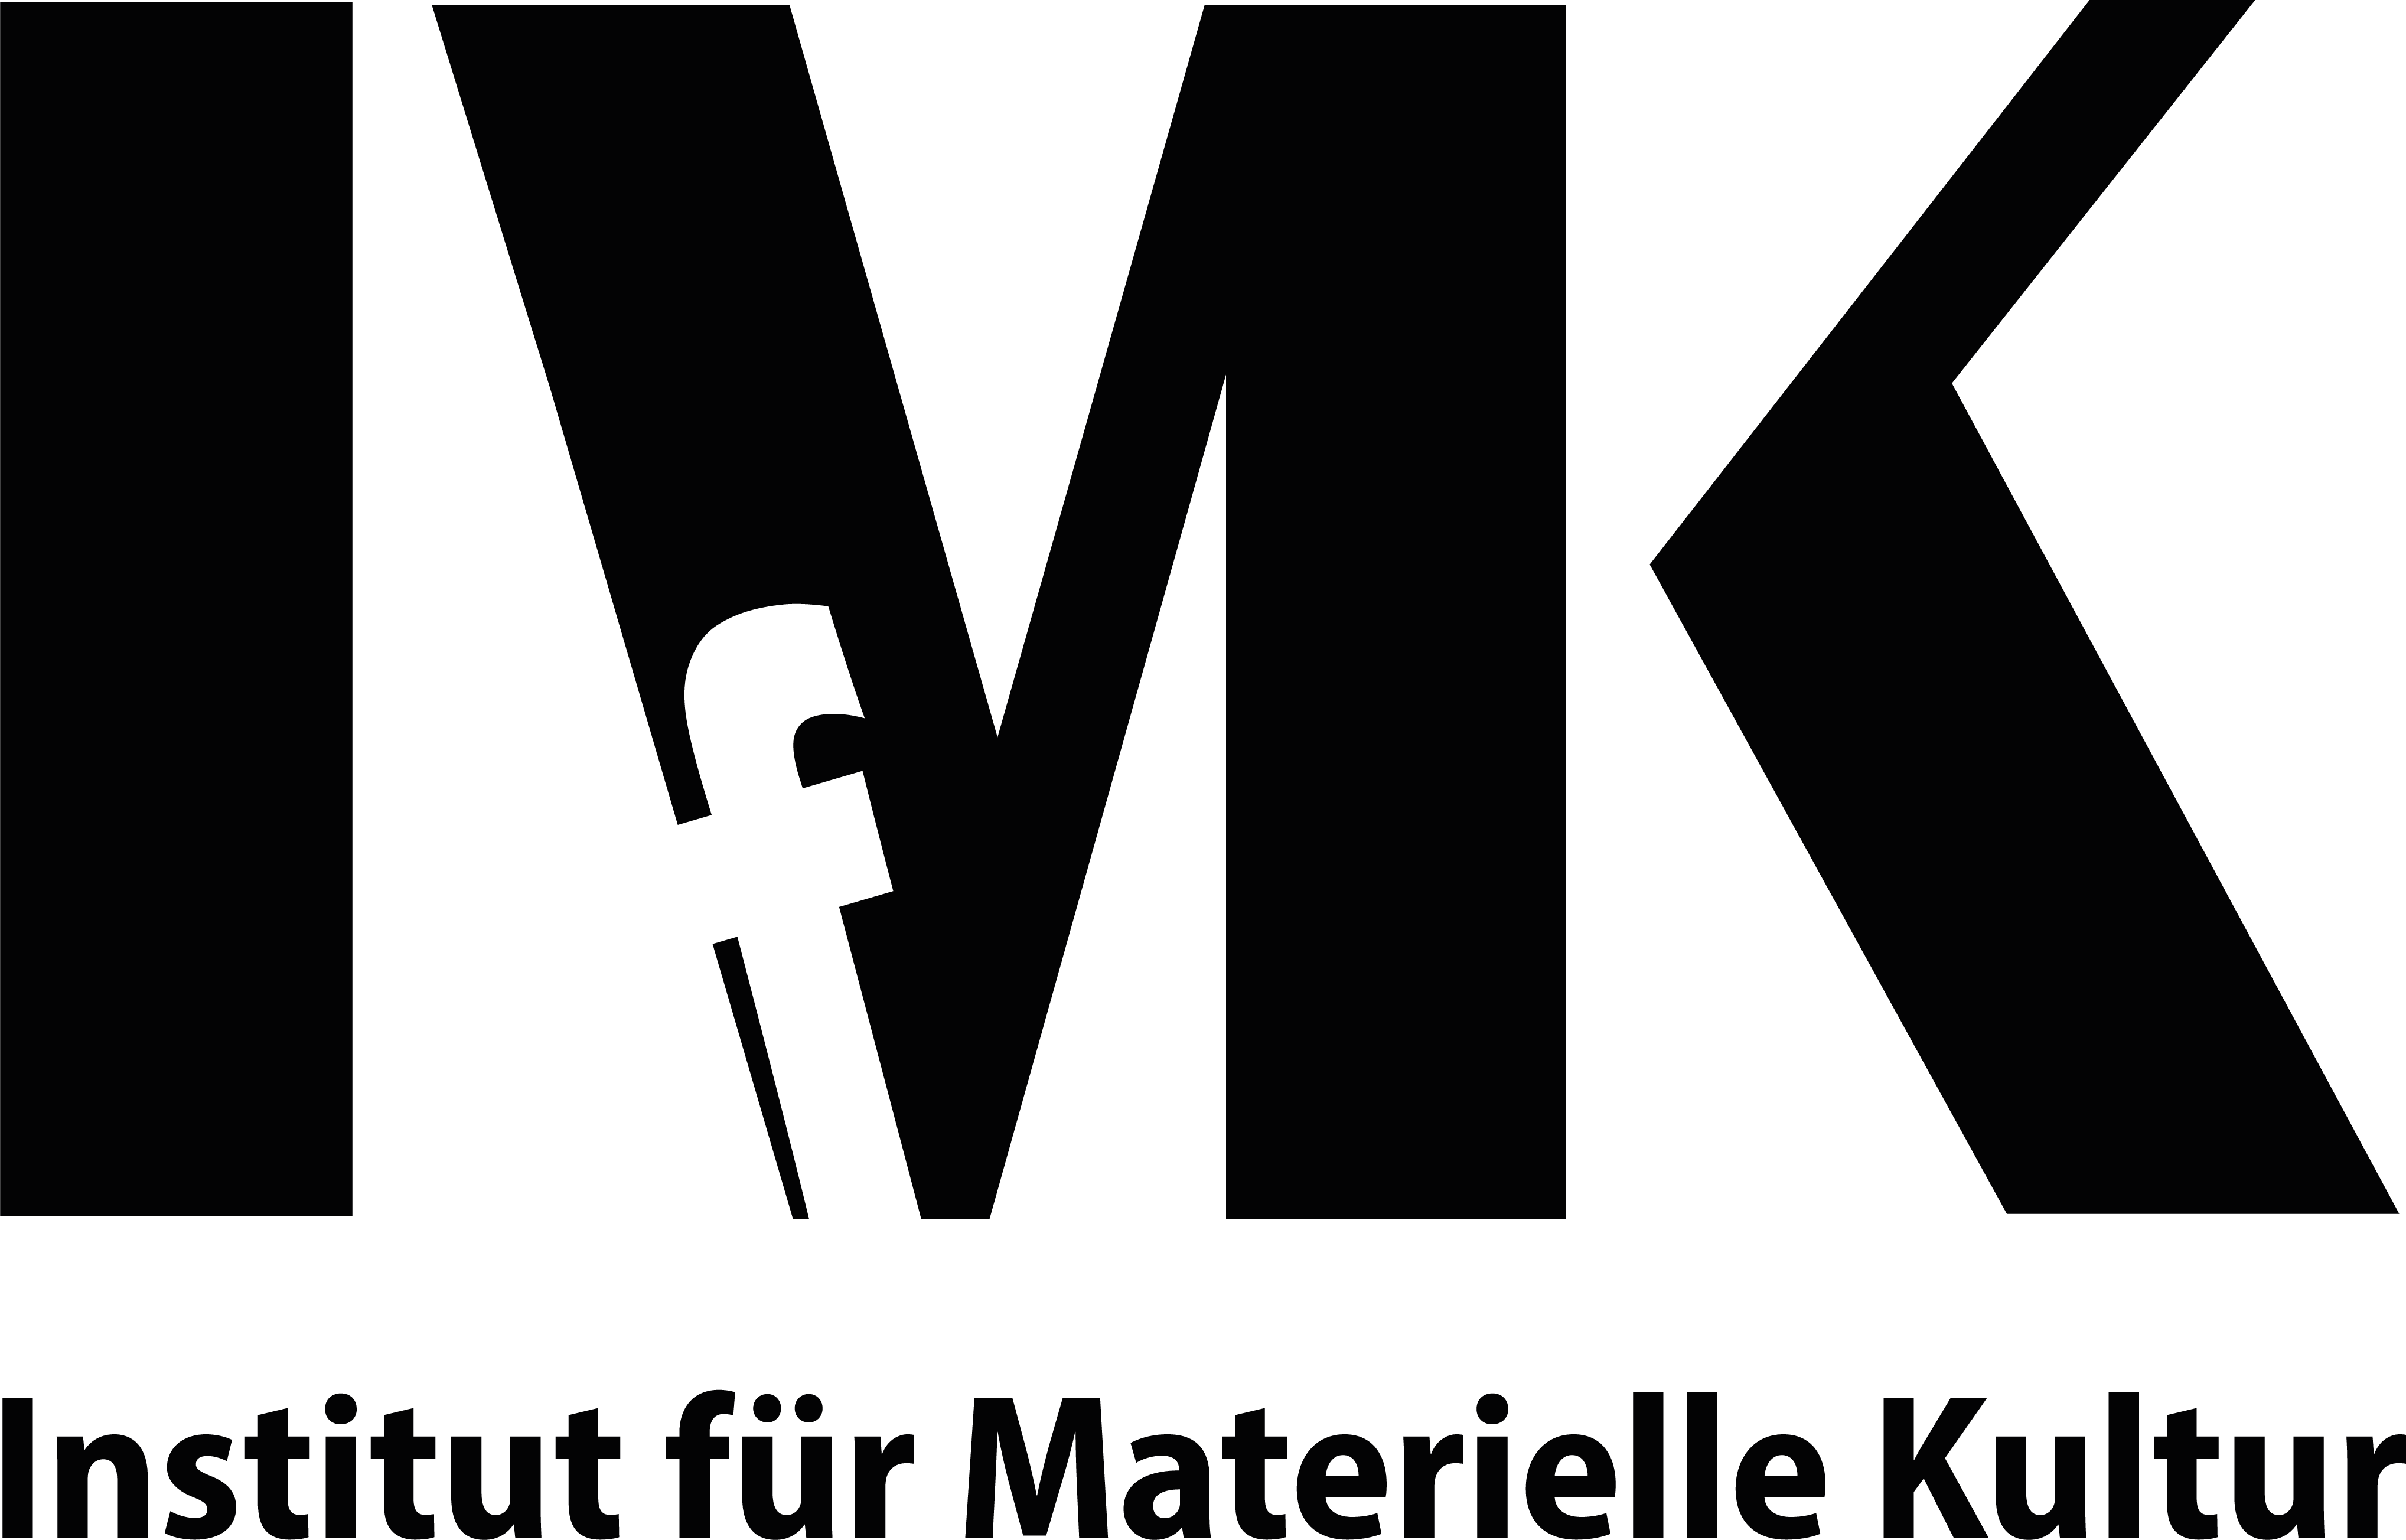 logo imk